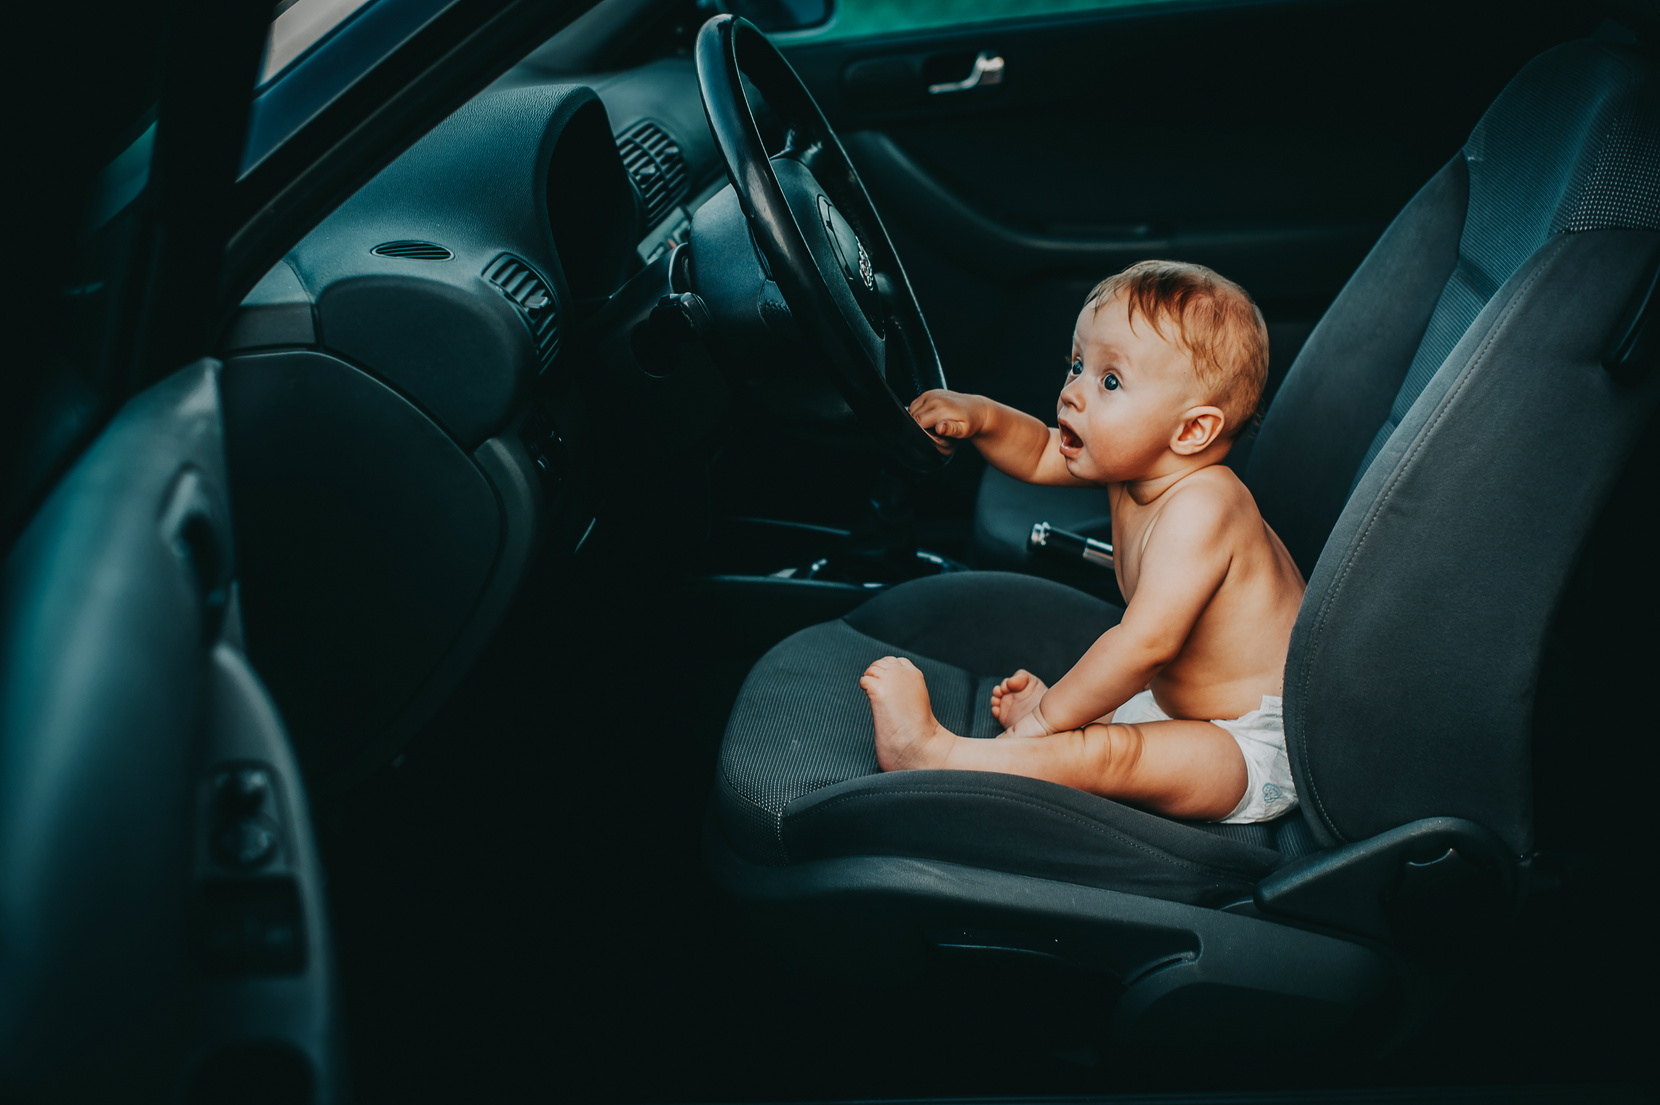 Baby Sitting on Car Seat